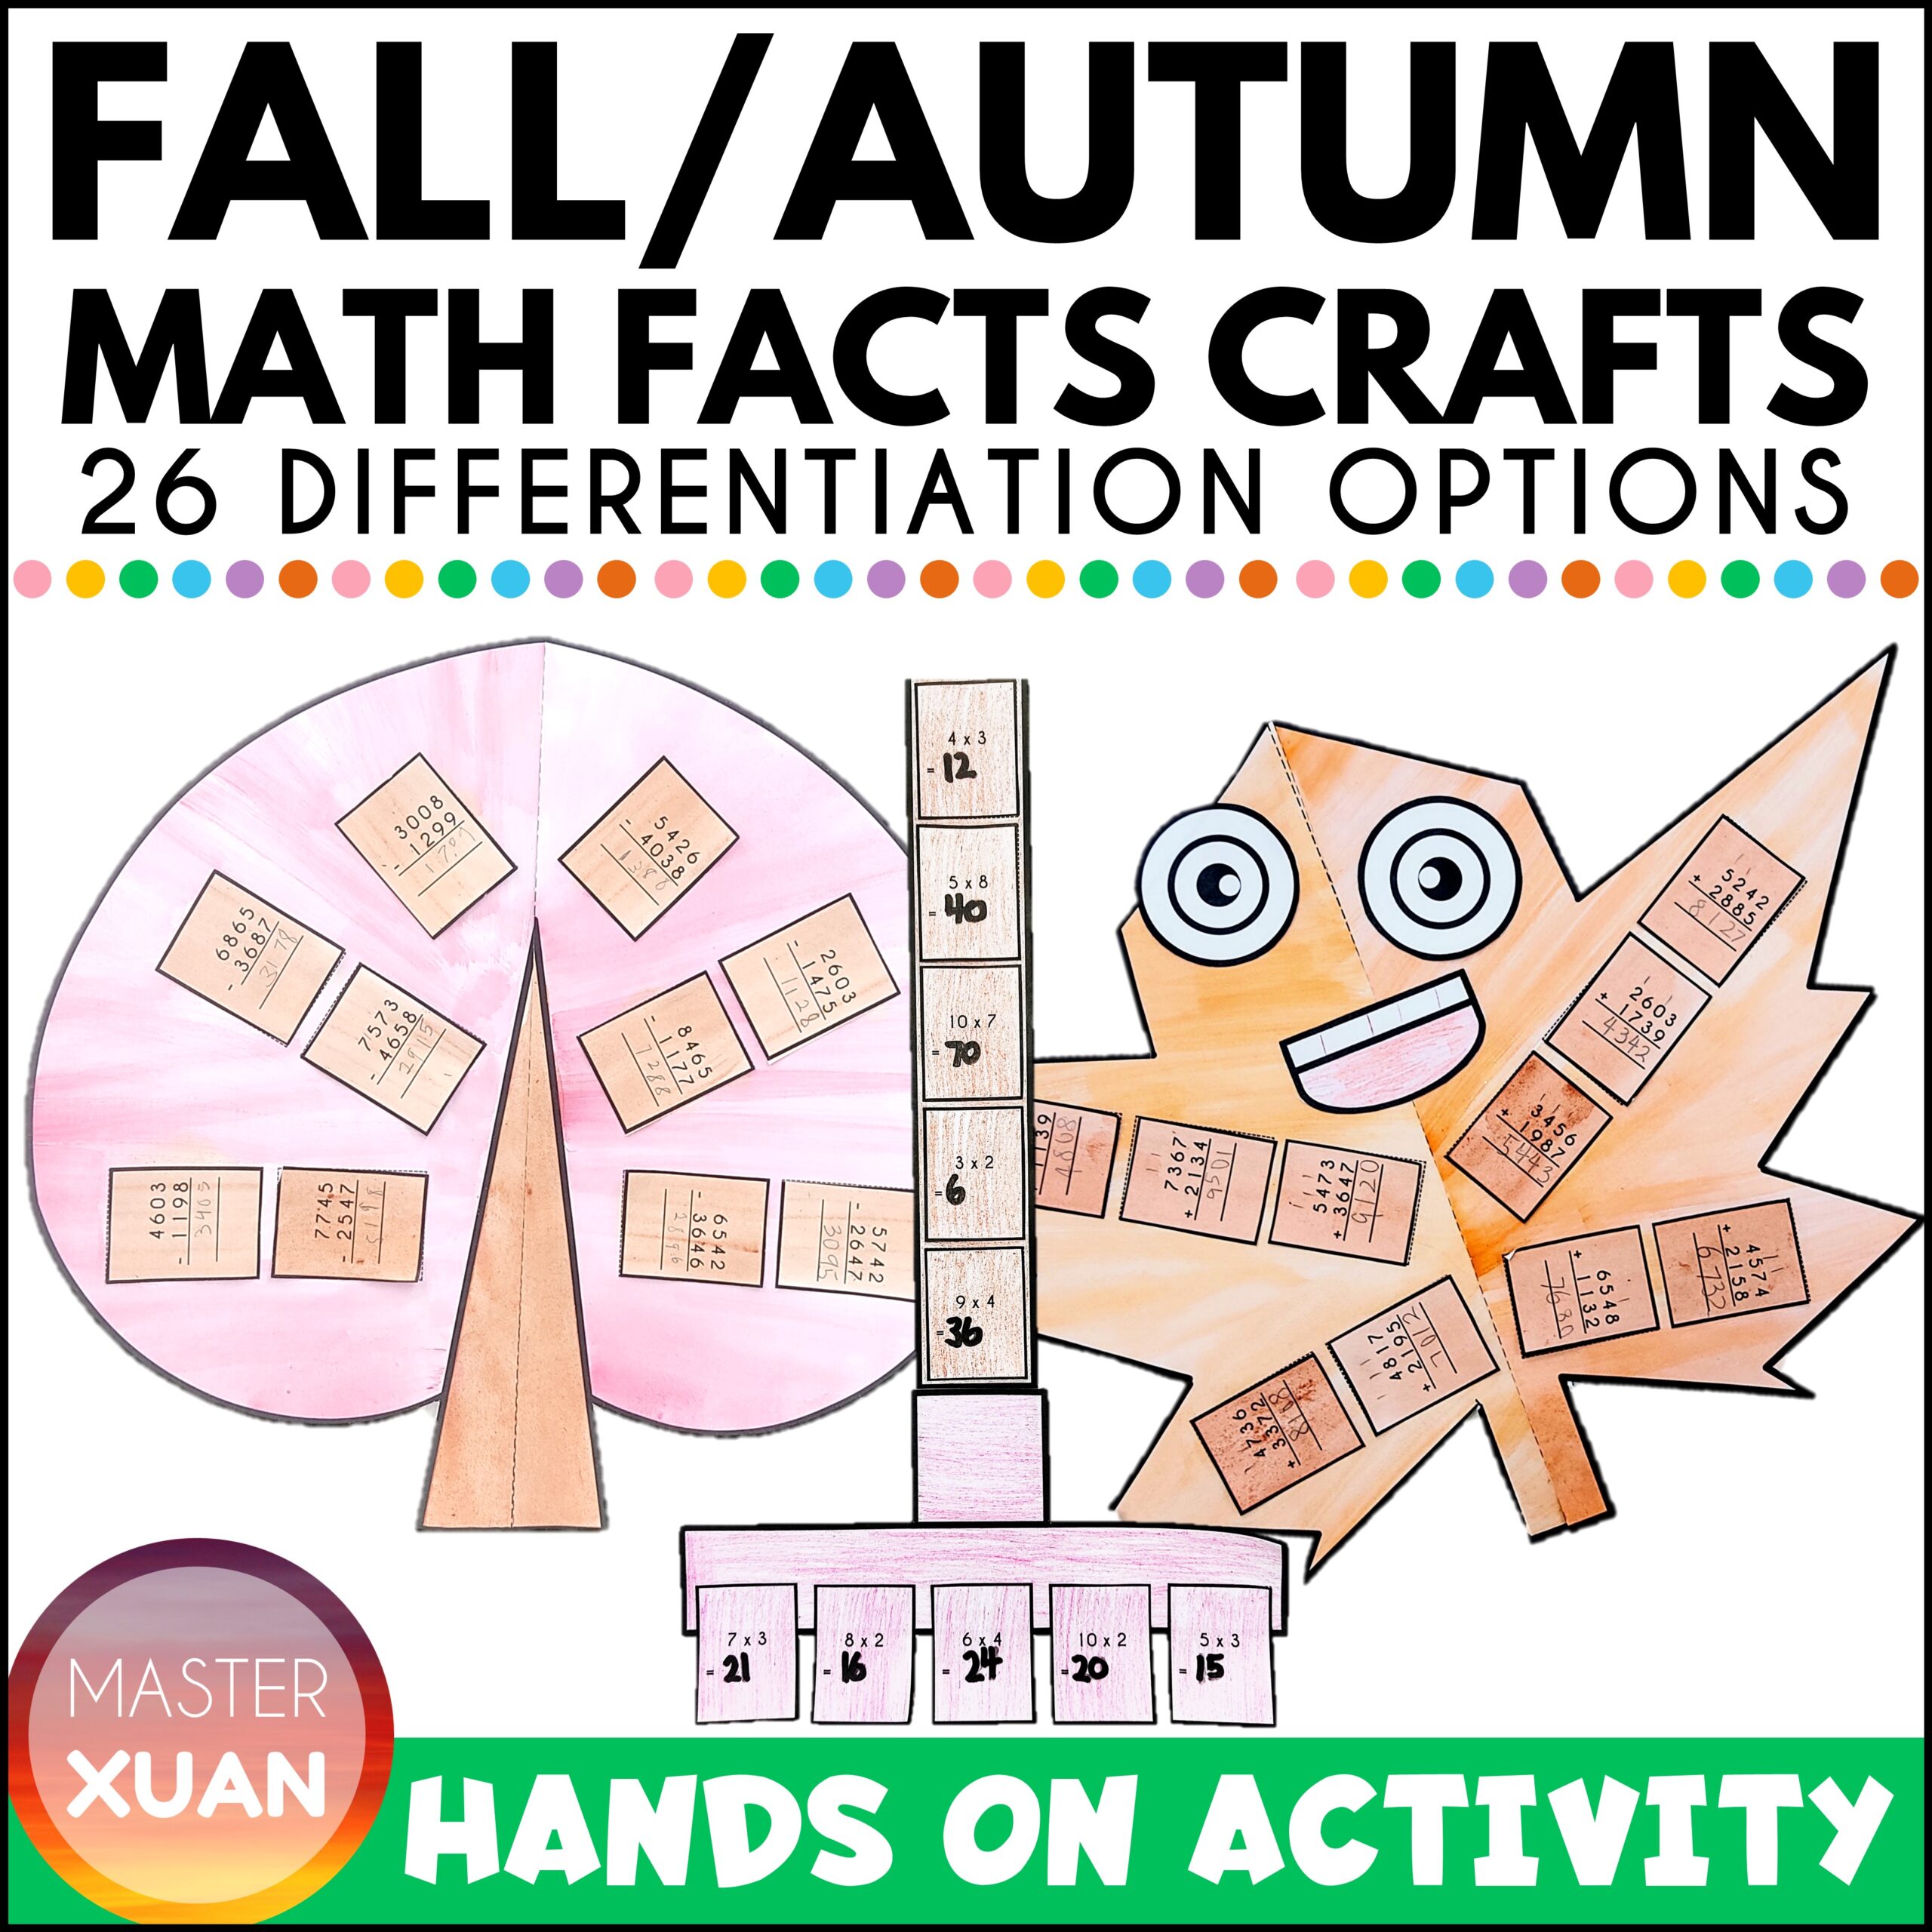 Fall/Autumn basic math facts activities - leaf craft, tree craft, rake craft. 